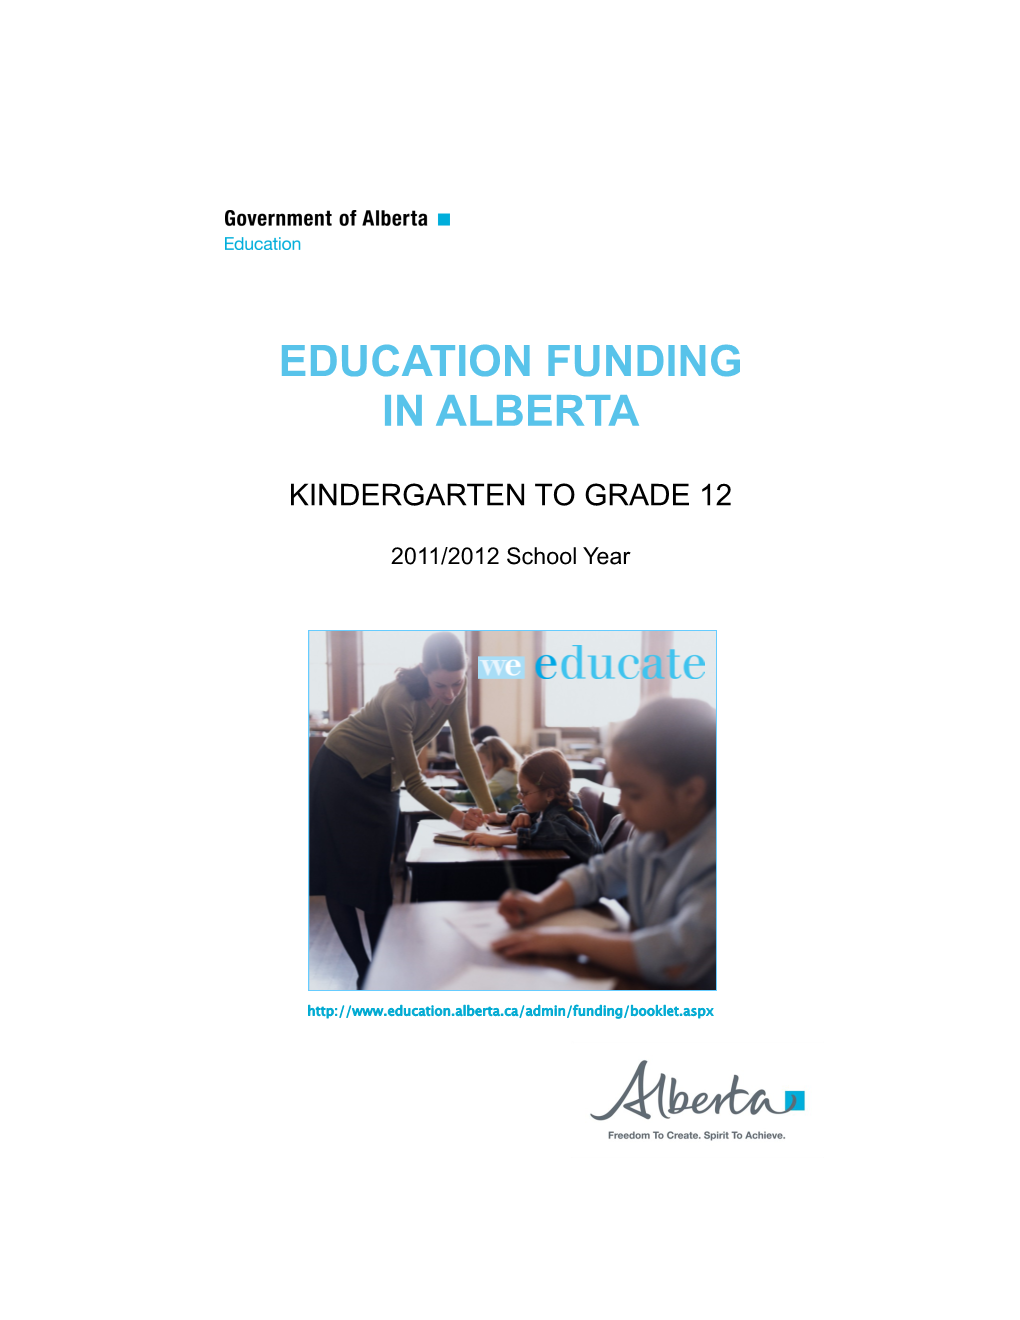 Education Funding in Alberta